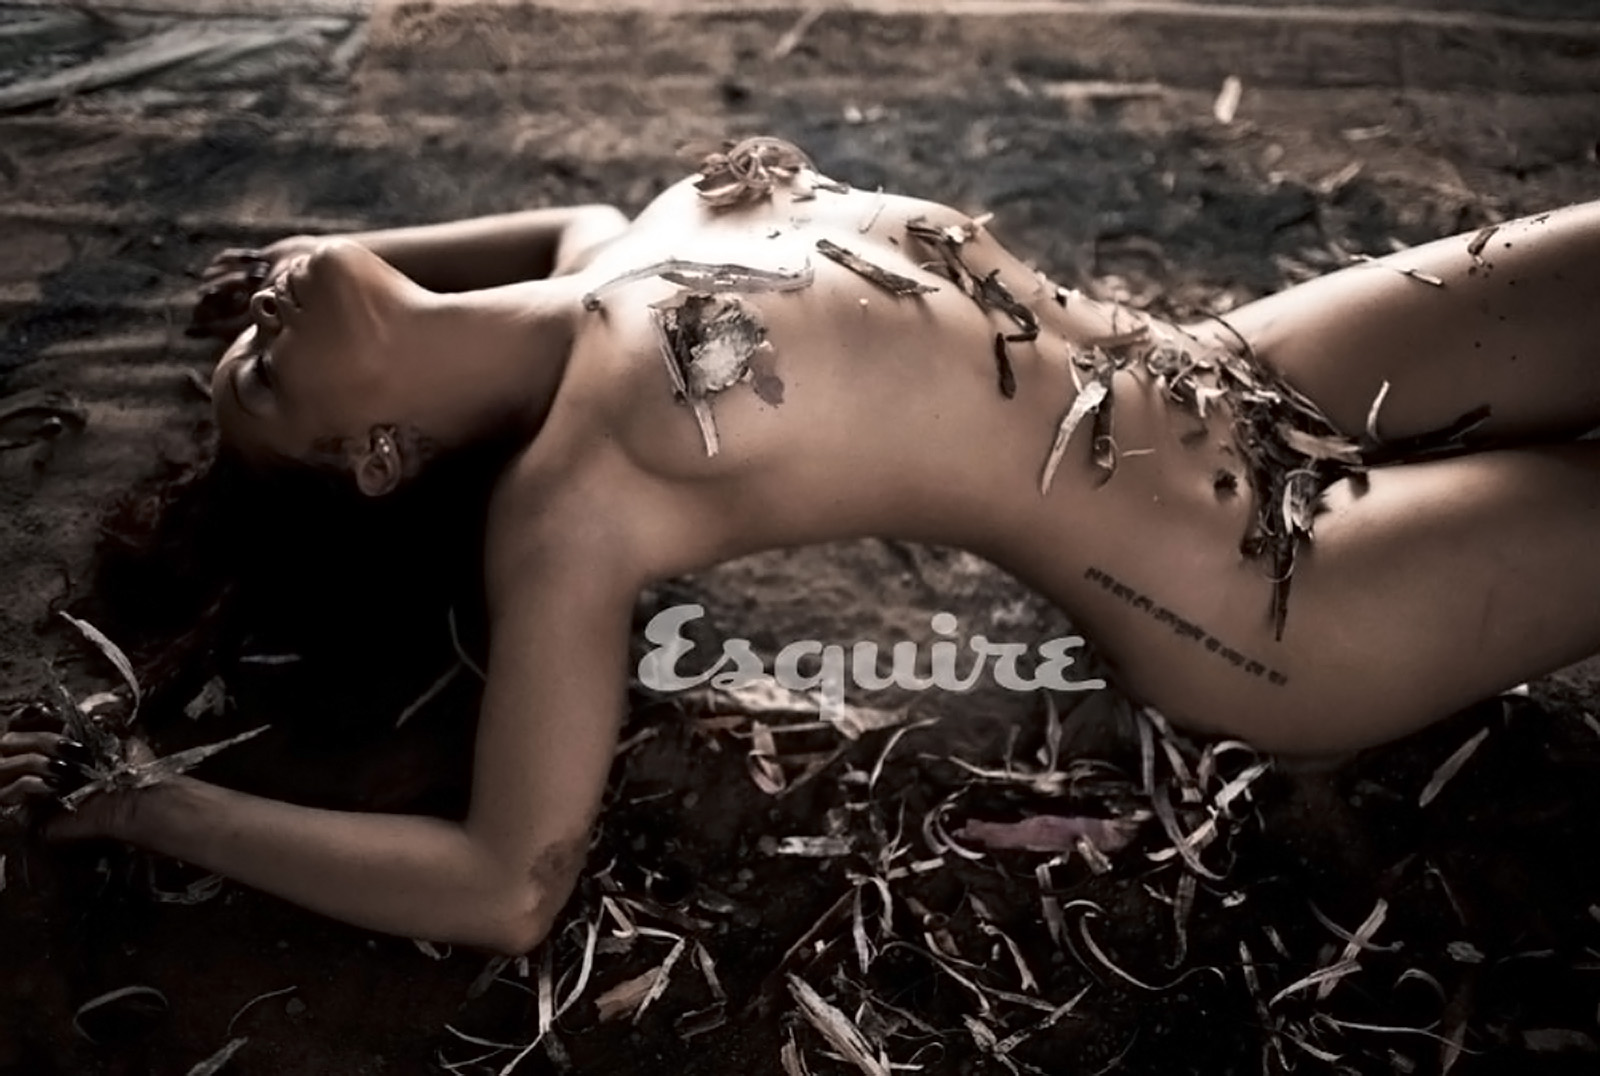 http://4.bp.blogspot.com/-0v7J9QJ8HUE/TpRVD2F3V8I/AAAAAAAACSc/dzH1MwXkBYI/s1600/Rihanna+nude+in+Esquire+November+2011+hot+naked+1.jpg